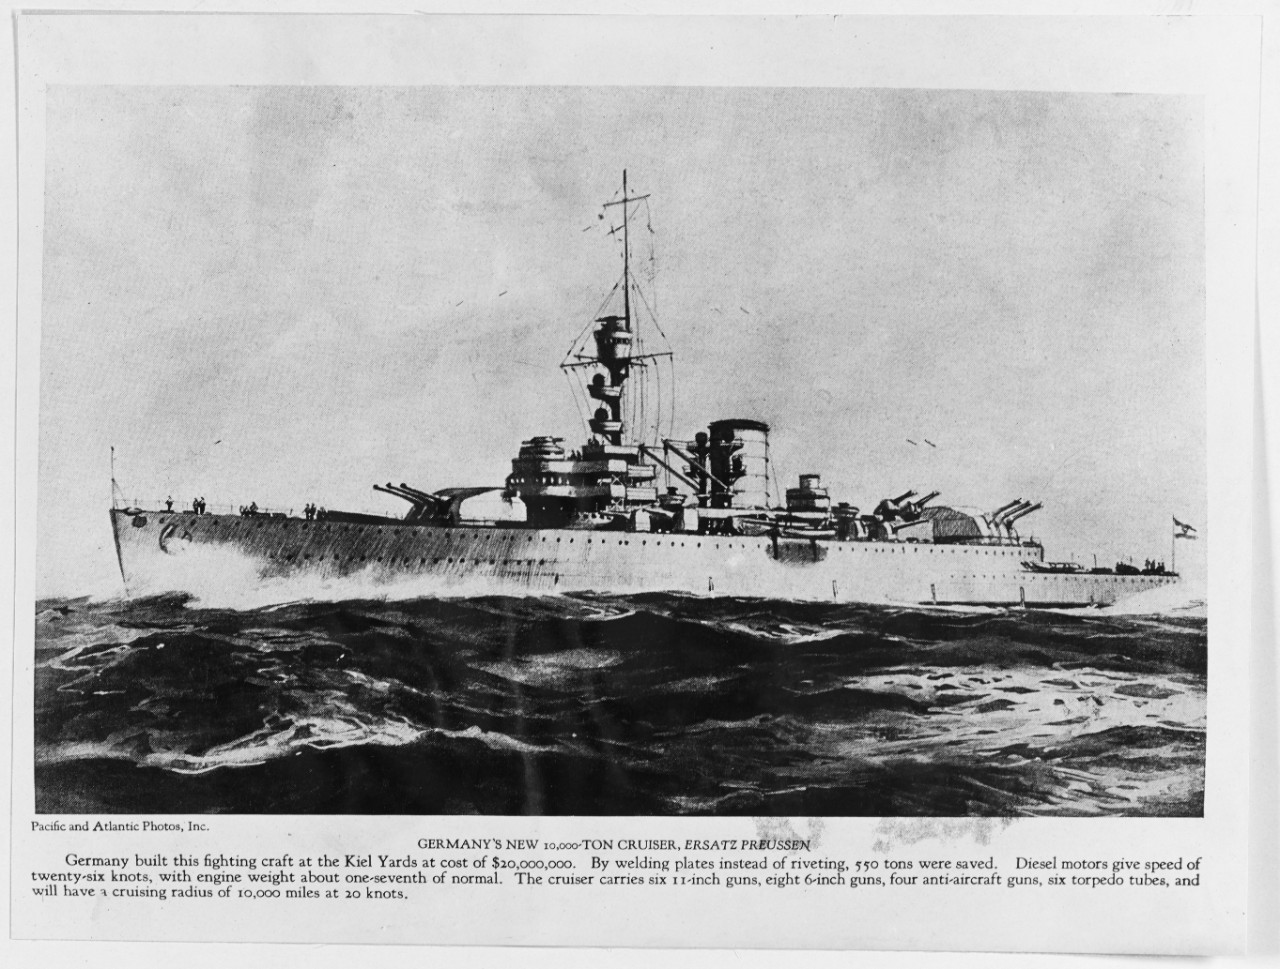 German cruiser ERSATZ PREUSSEN